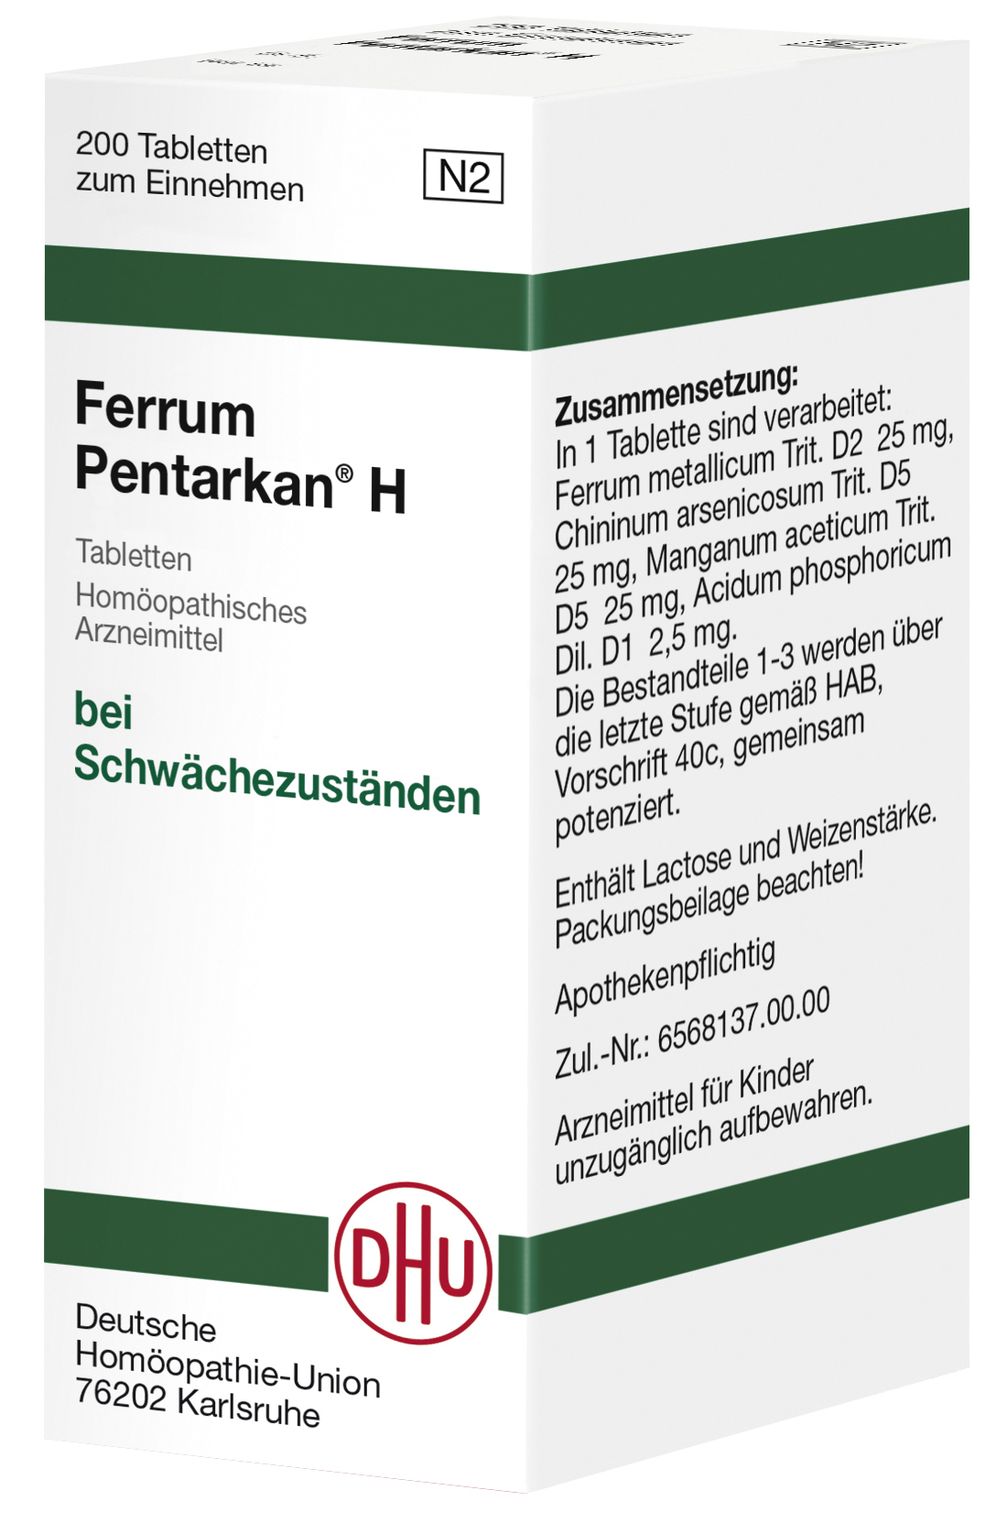 DHU_Ferrum_Pentarkan  Bild: Deutsche Homöopathie-Union DHU-Arzneimittel GmbH & Co. KG Fotograf: Deutsche Homöopathie-Union DHU-Arzneimittel GmbH & Co. KG